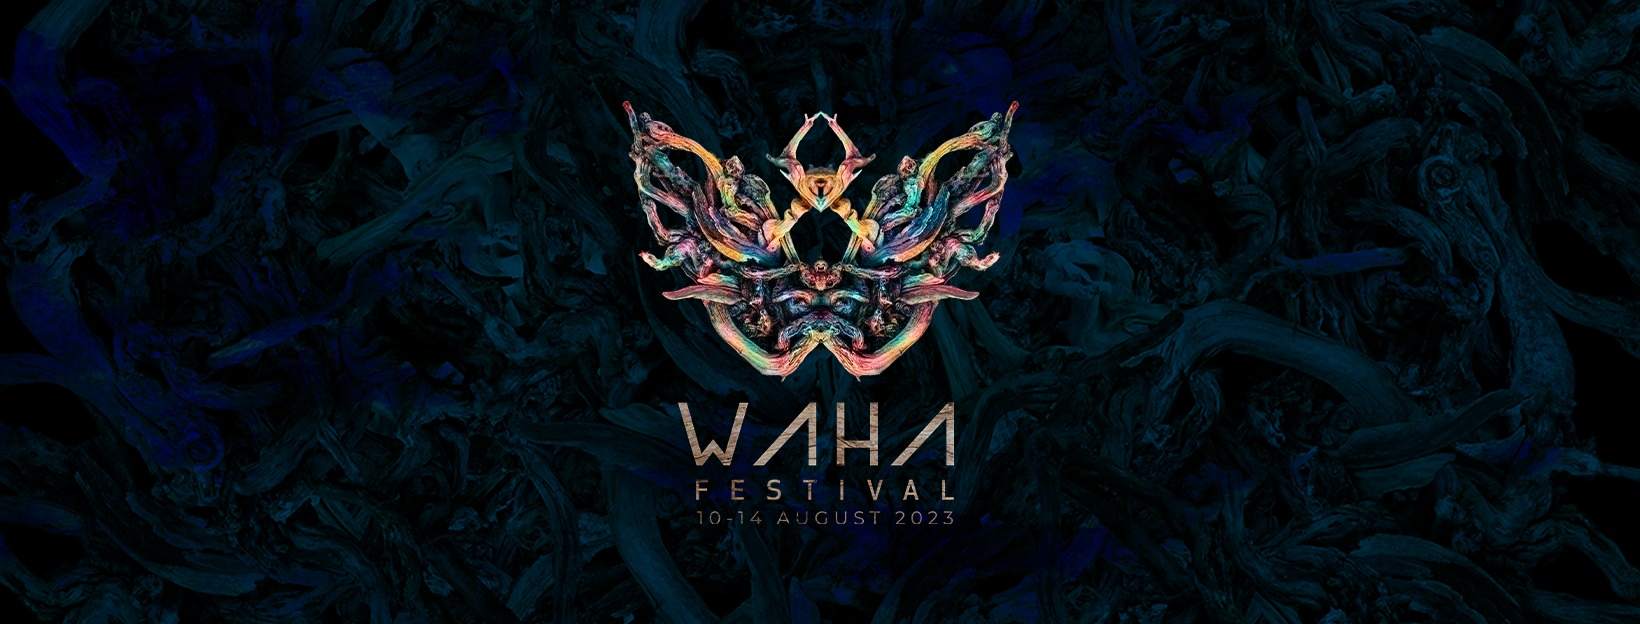 Waha Festival 2023